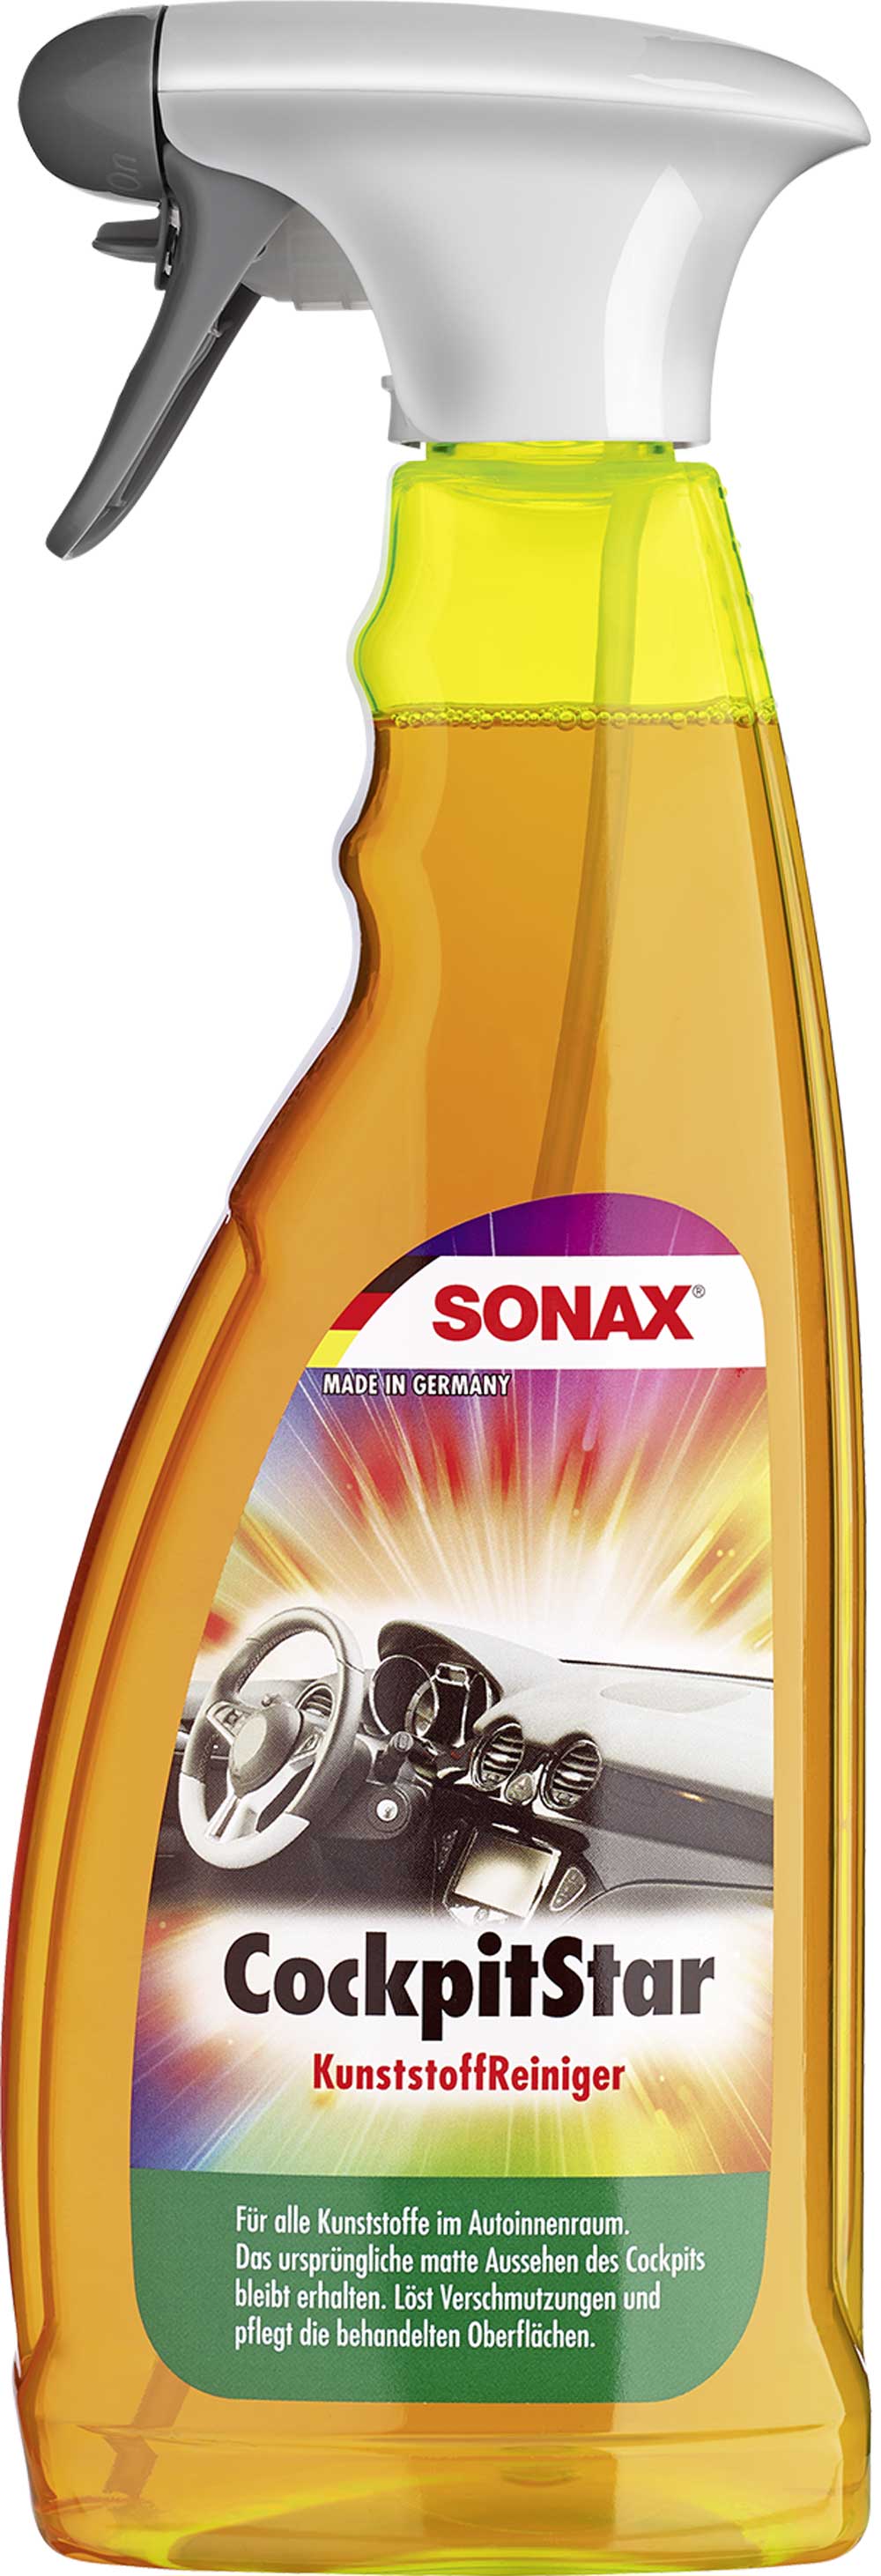 SONAX CockpitStar 750ml